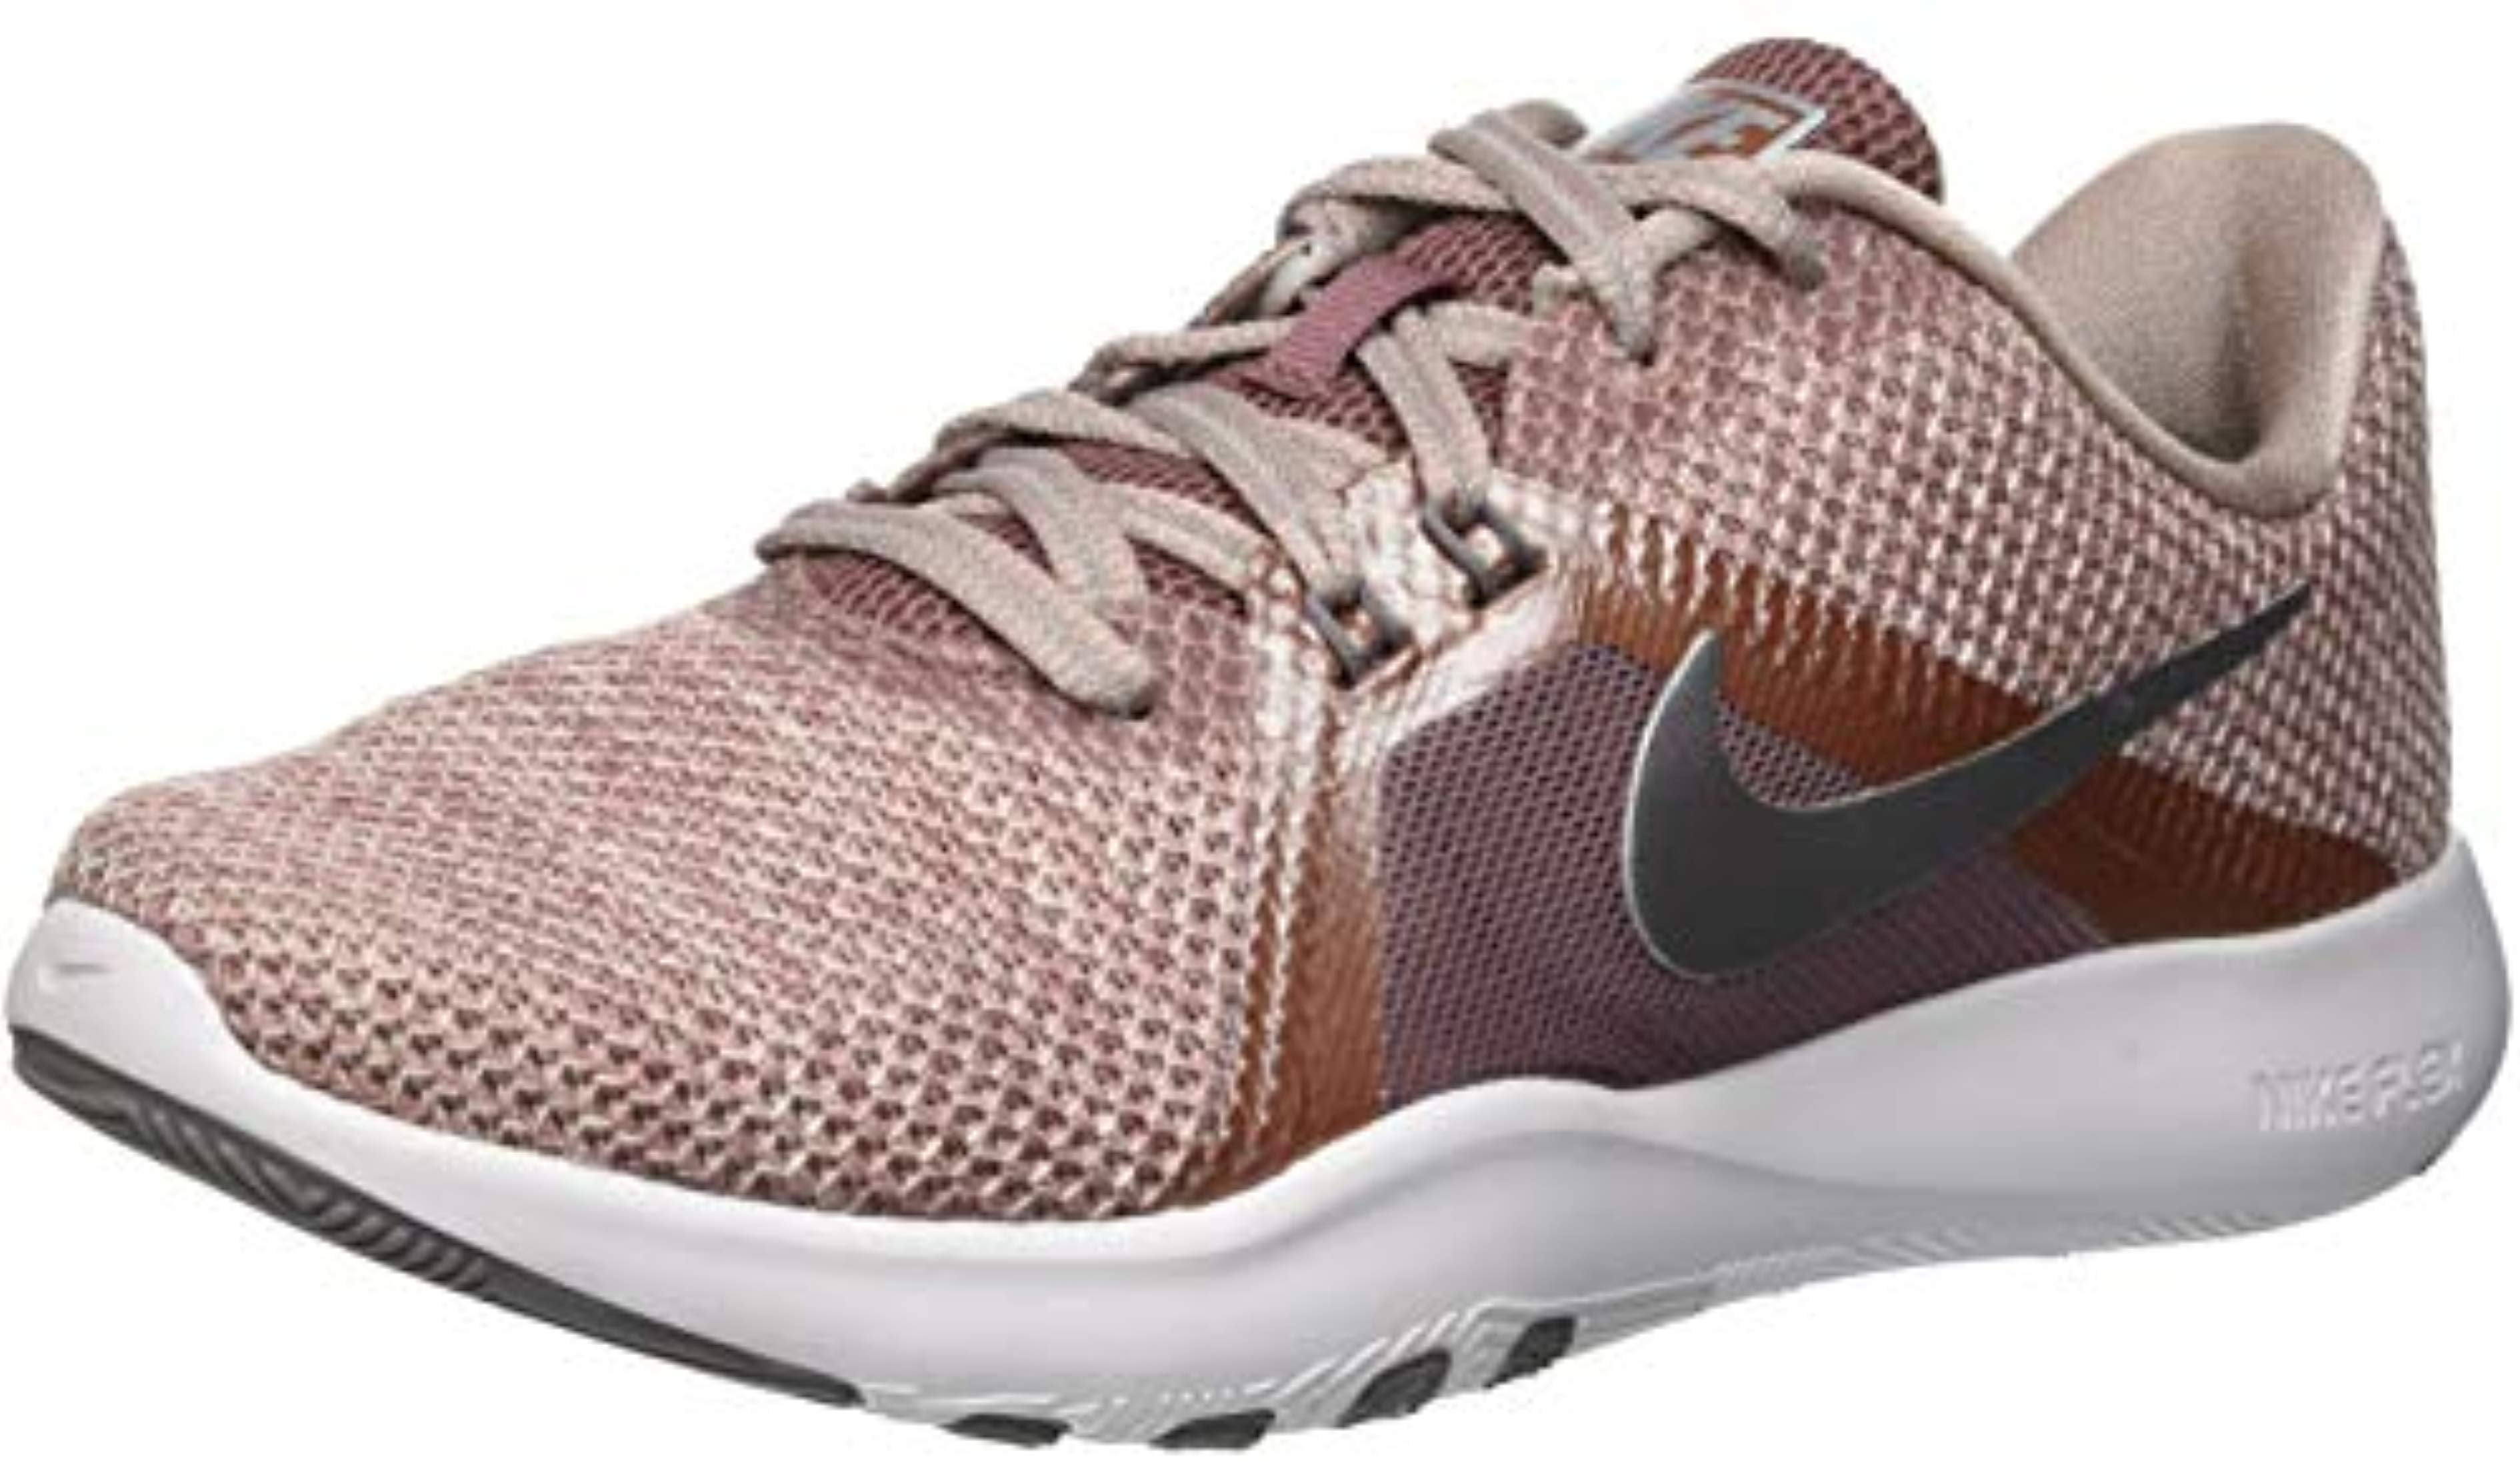 Nike Flex TR 8 Premium Women's Training Shoe - Walmart.com